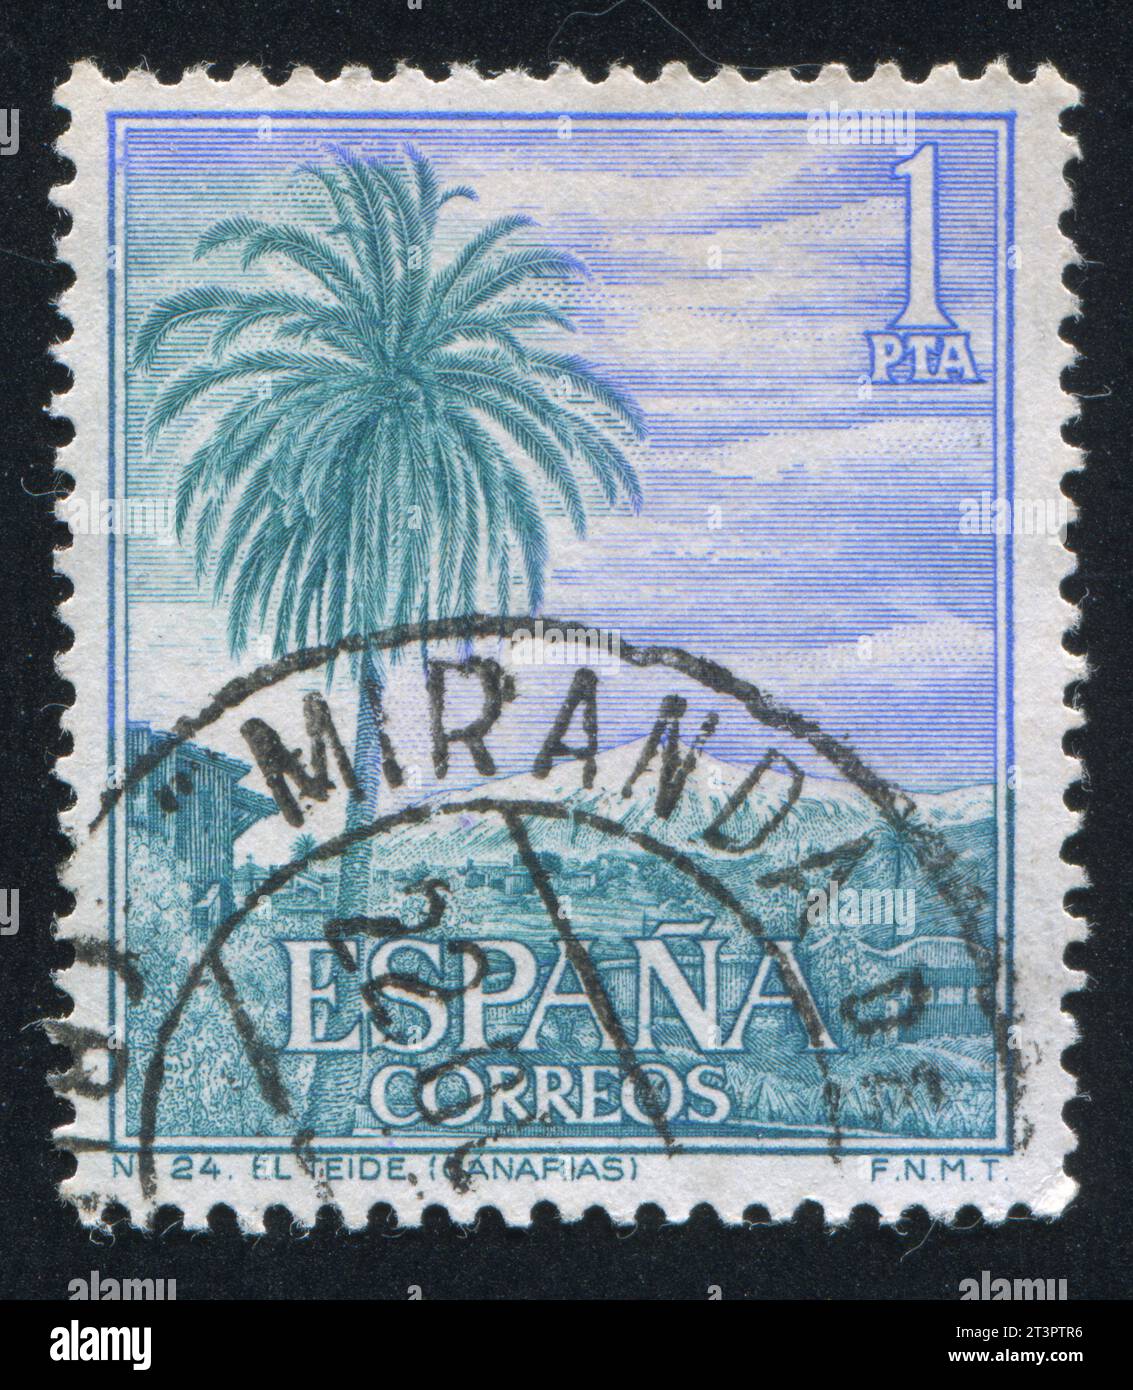 SPANIEN - CA. 1966: Briefmarke von Spanien, zeigt Pico de Teyde in Santa Cruz de Tenerife, ca. 1966 Stockfoto